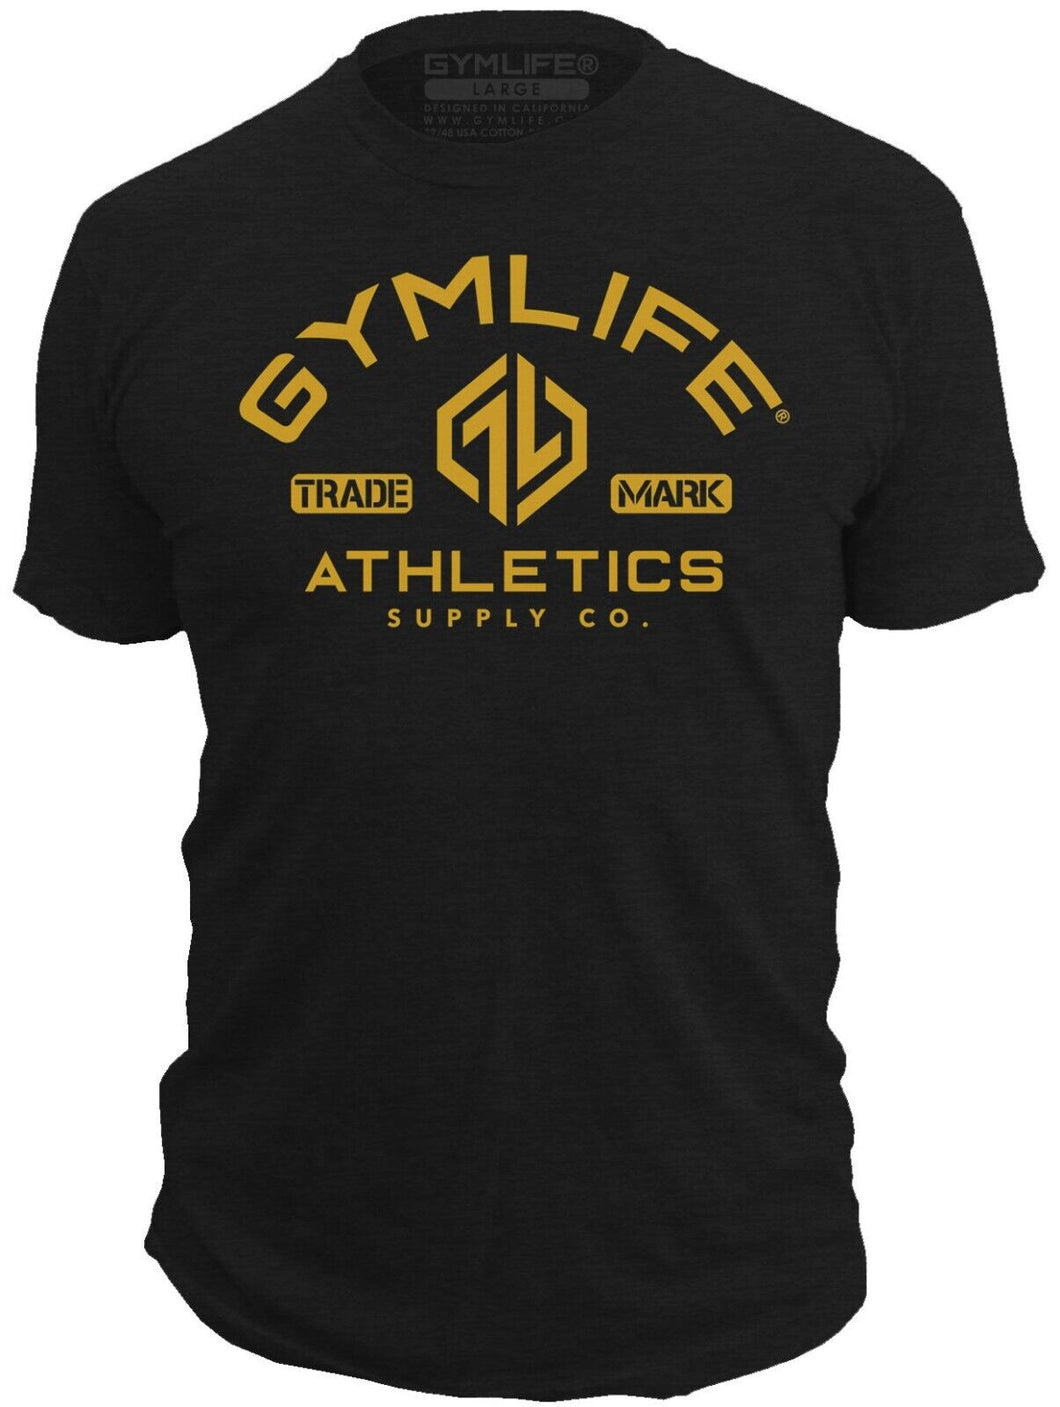 Gym Life® Mens - Supply Co. - 52/48 Athletic T-Shirt - Black